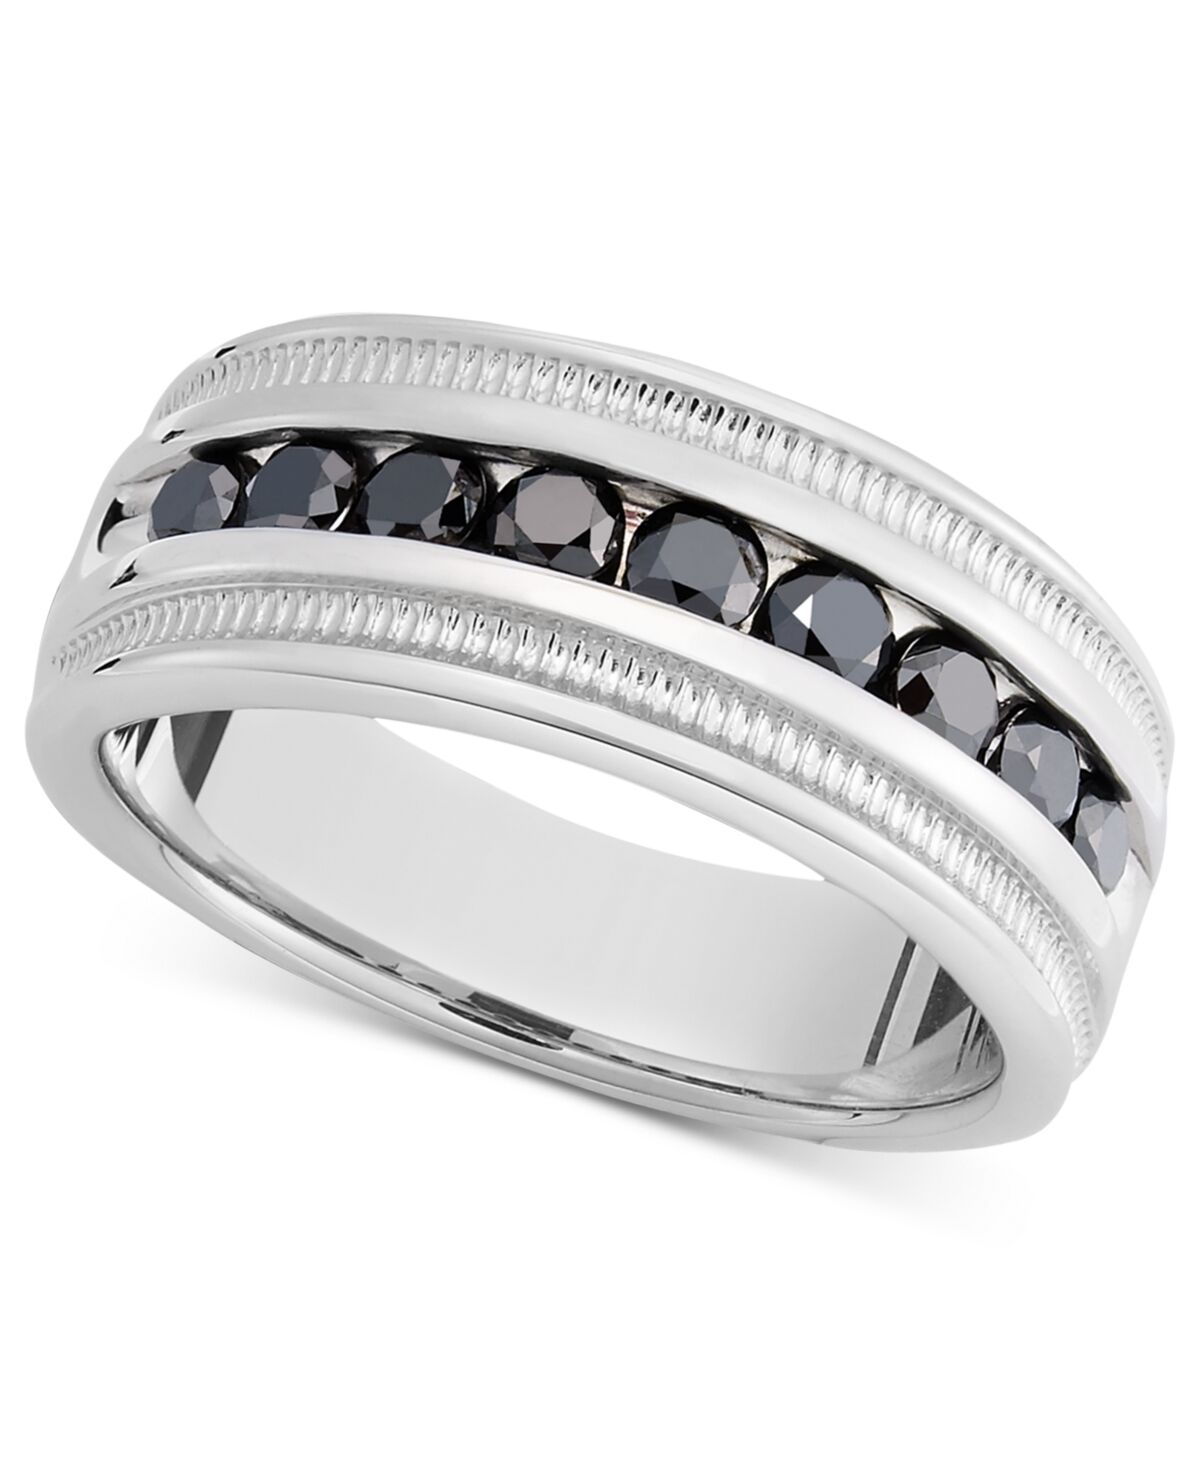 Macy's Men's Sterling Silver Ring, Black Diamond Band (1 ct. t.w.) - Silver